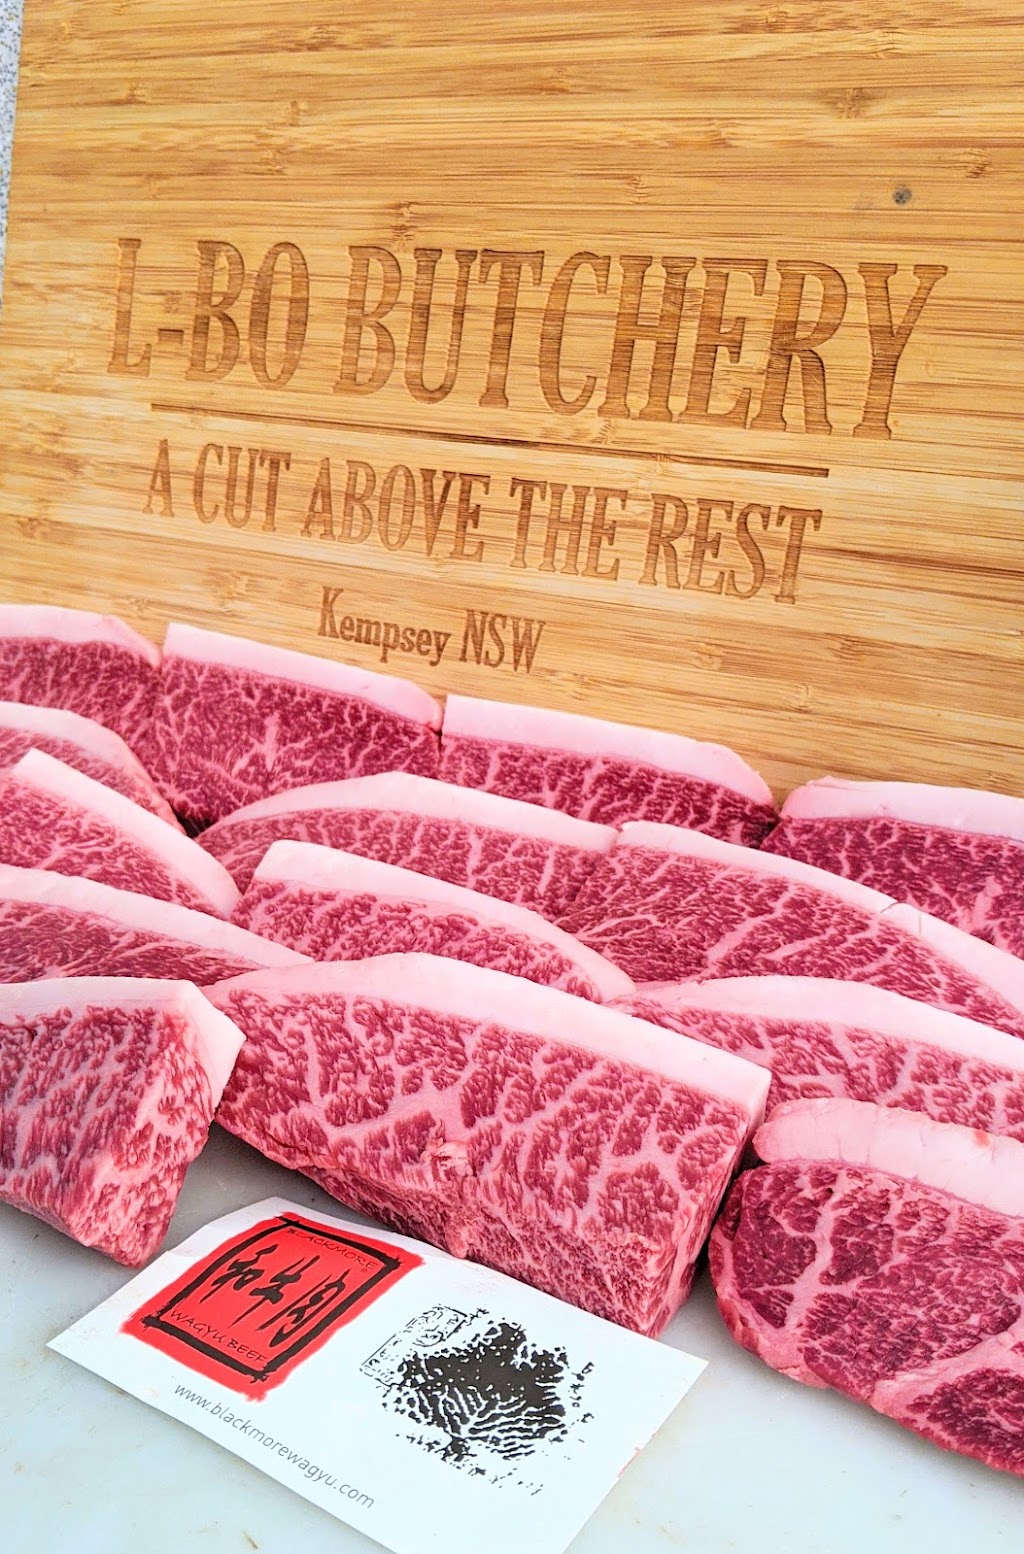 L-Bo Butchery | store | 56 Elbow St, Kempsey NSW 2440, Australia | 0265625109 OR +61 2 6562 5109